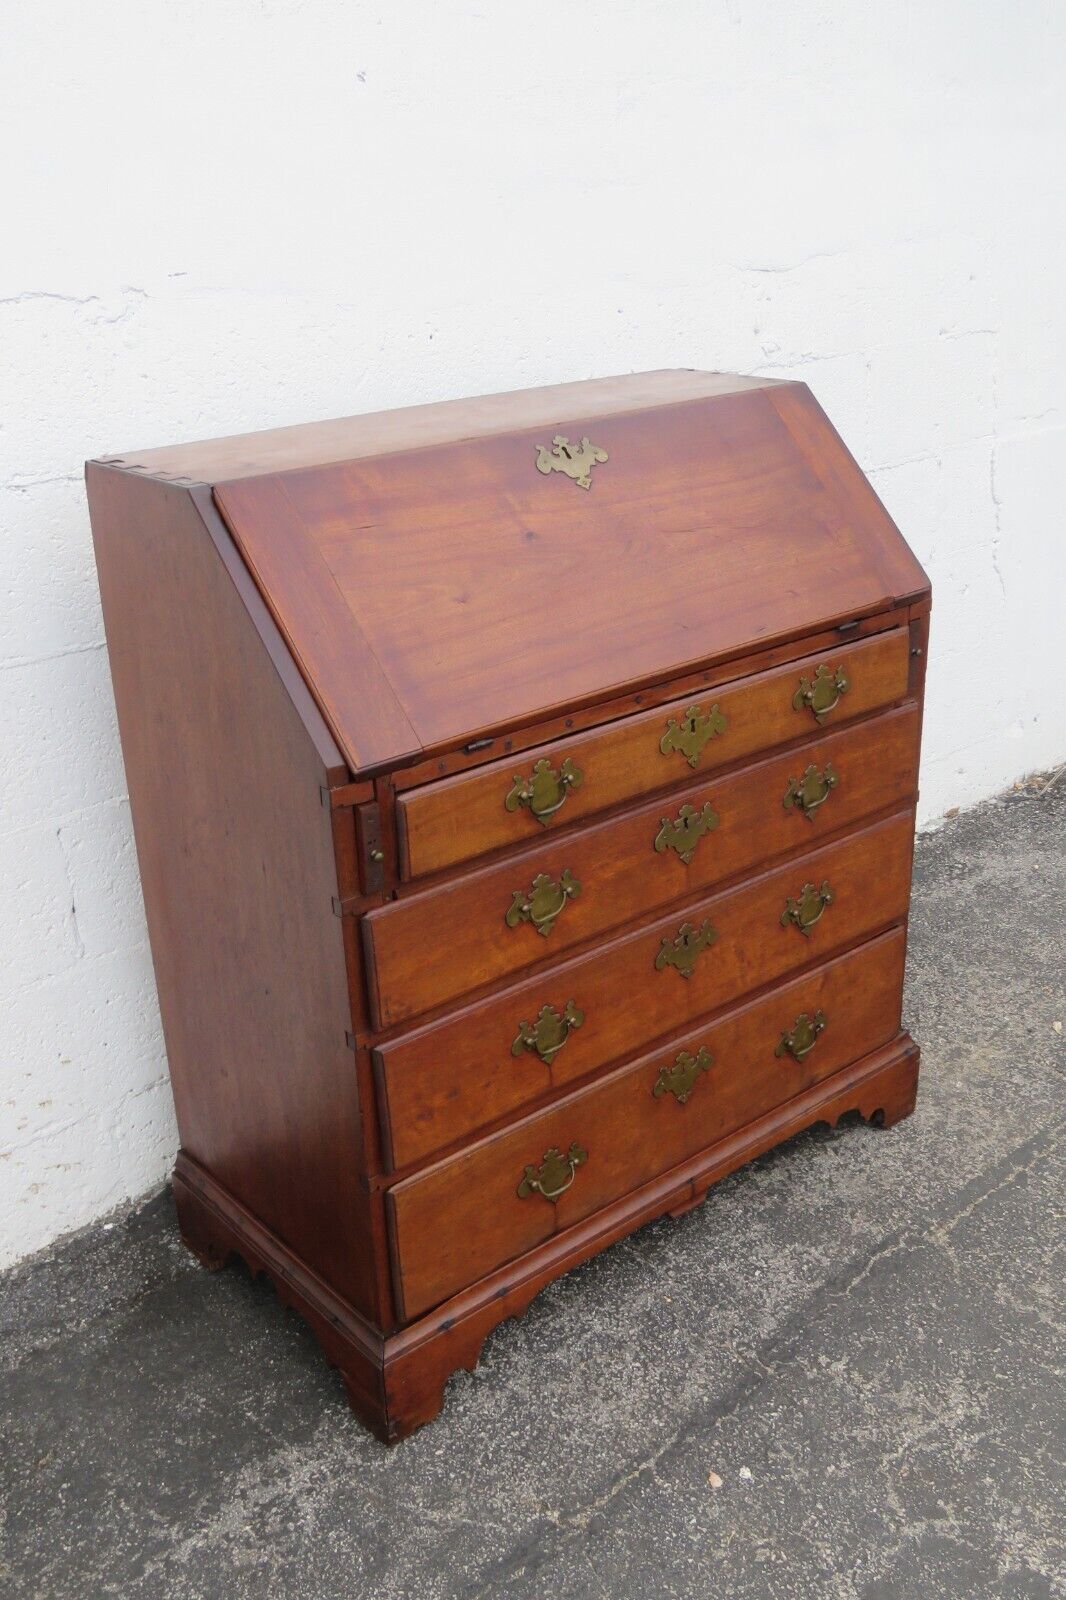 Early 1800s Solid Wood Secretary Desk 3930